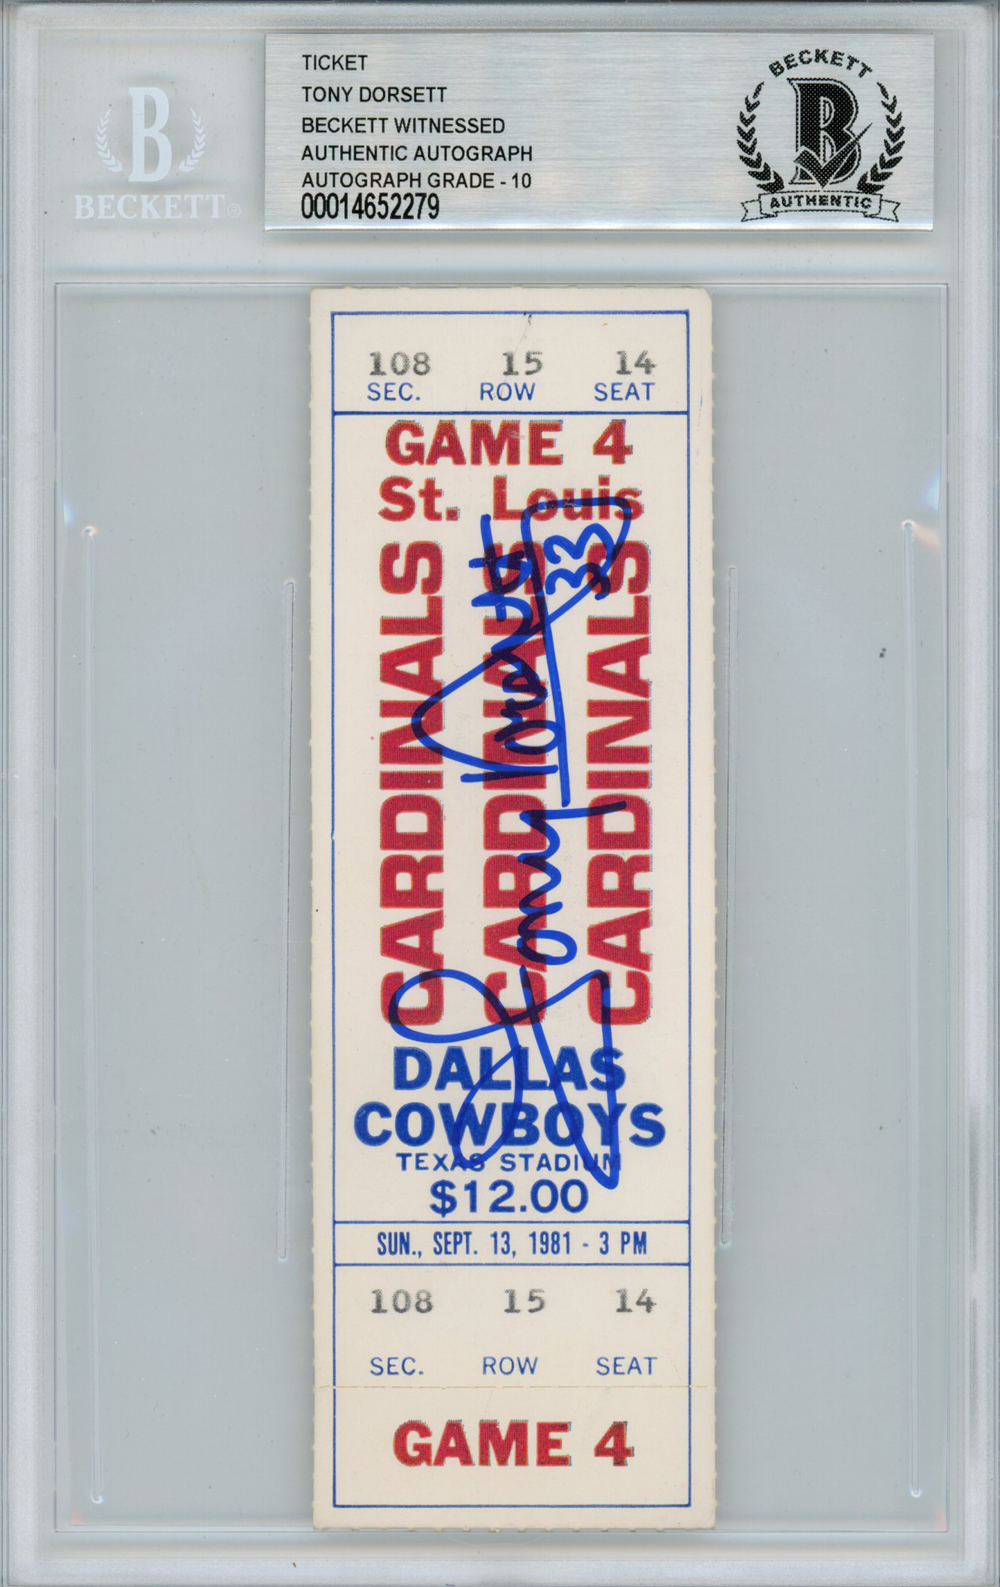 Tony Dorsett Autographed 9/13/1981 vs Cardinals Full Ticket Beckett Slab